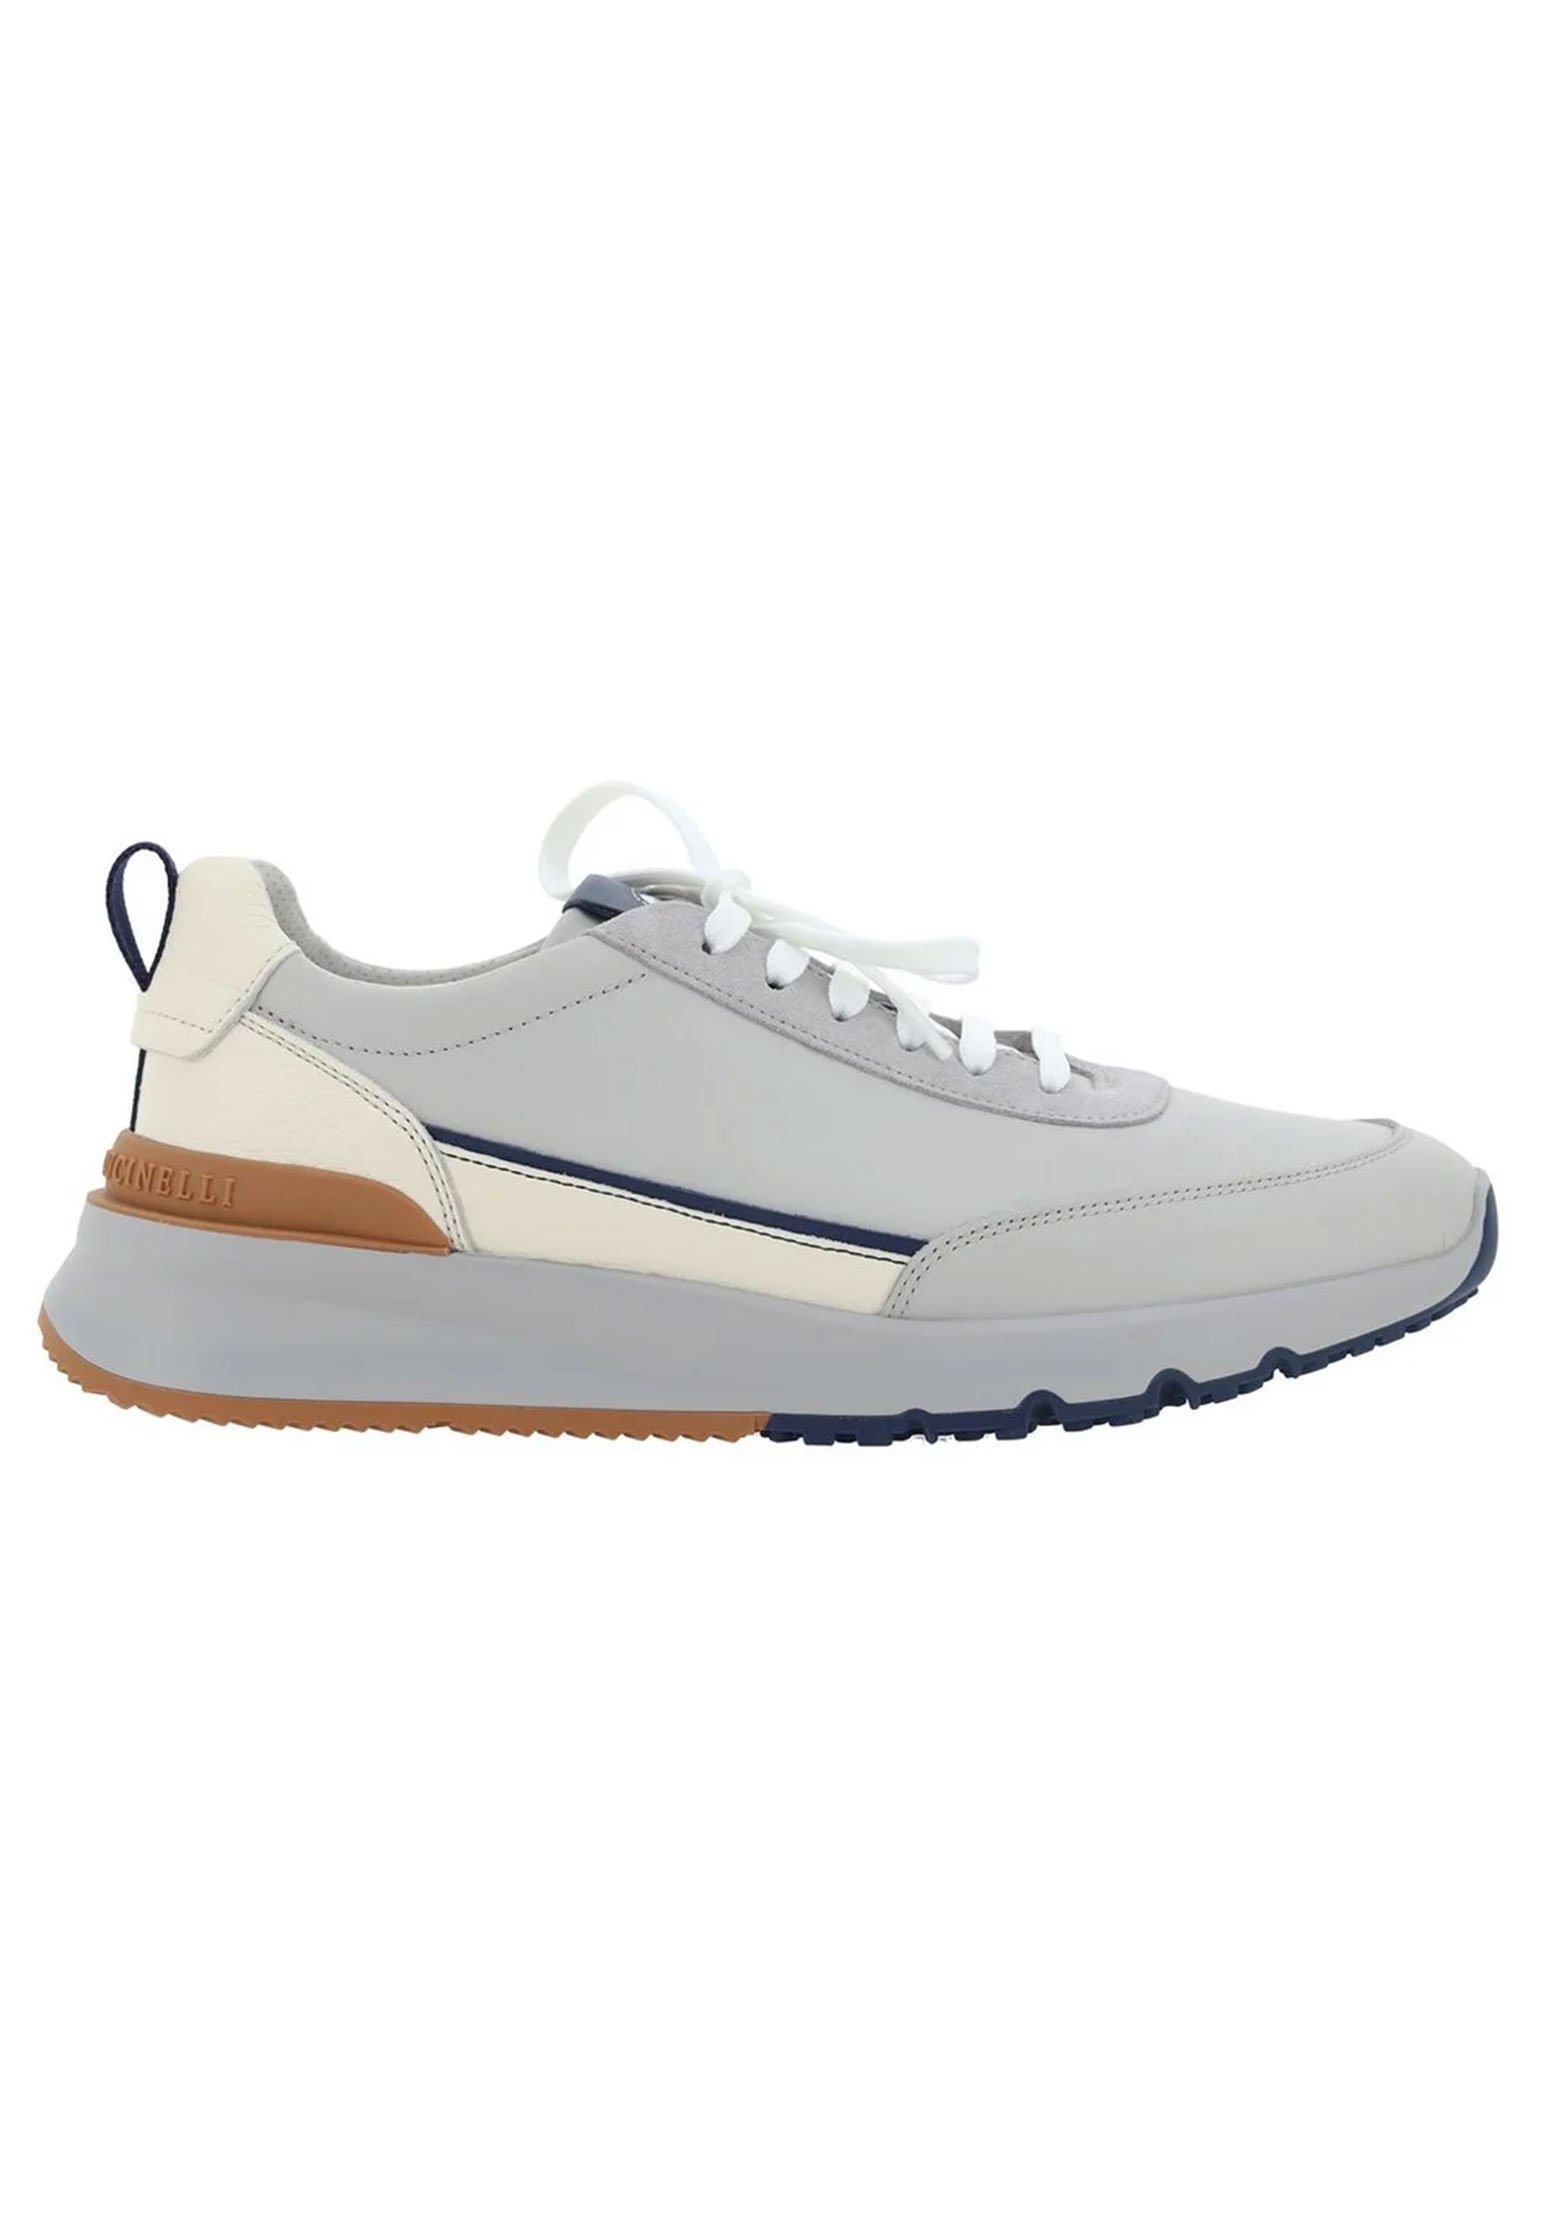 Sneakers BRUNELLO CUCINELLI Color: grey (Code: 3487) in online store Allure